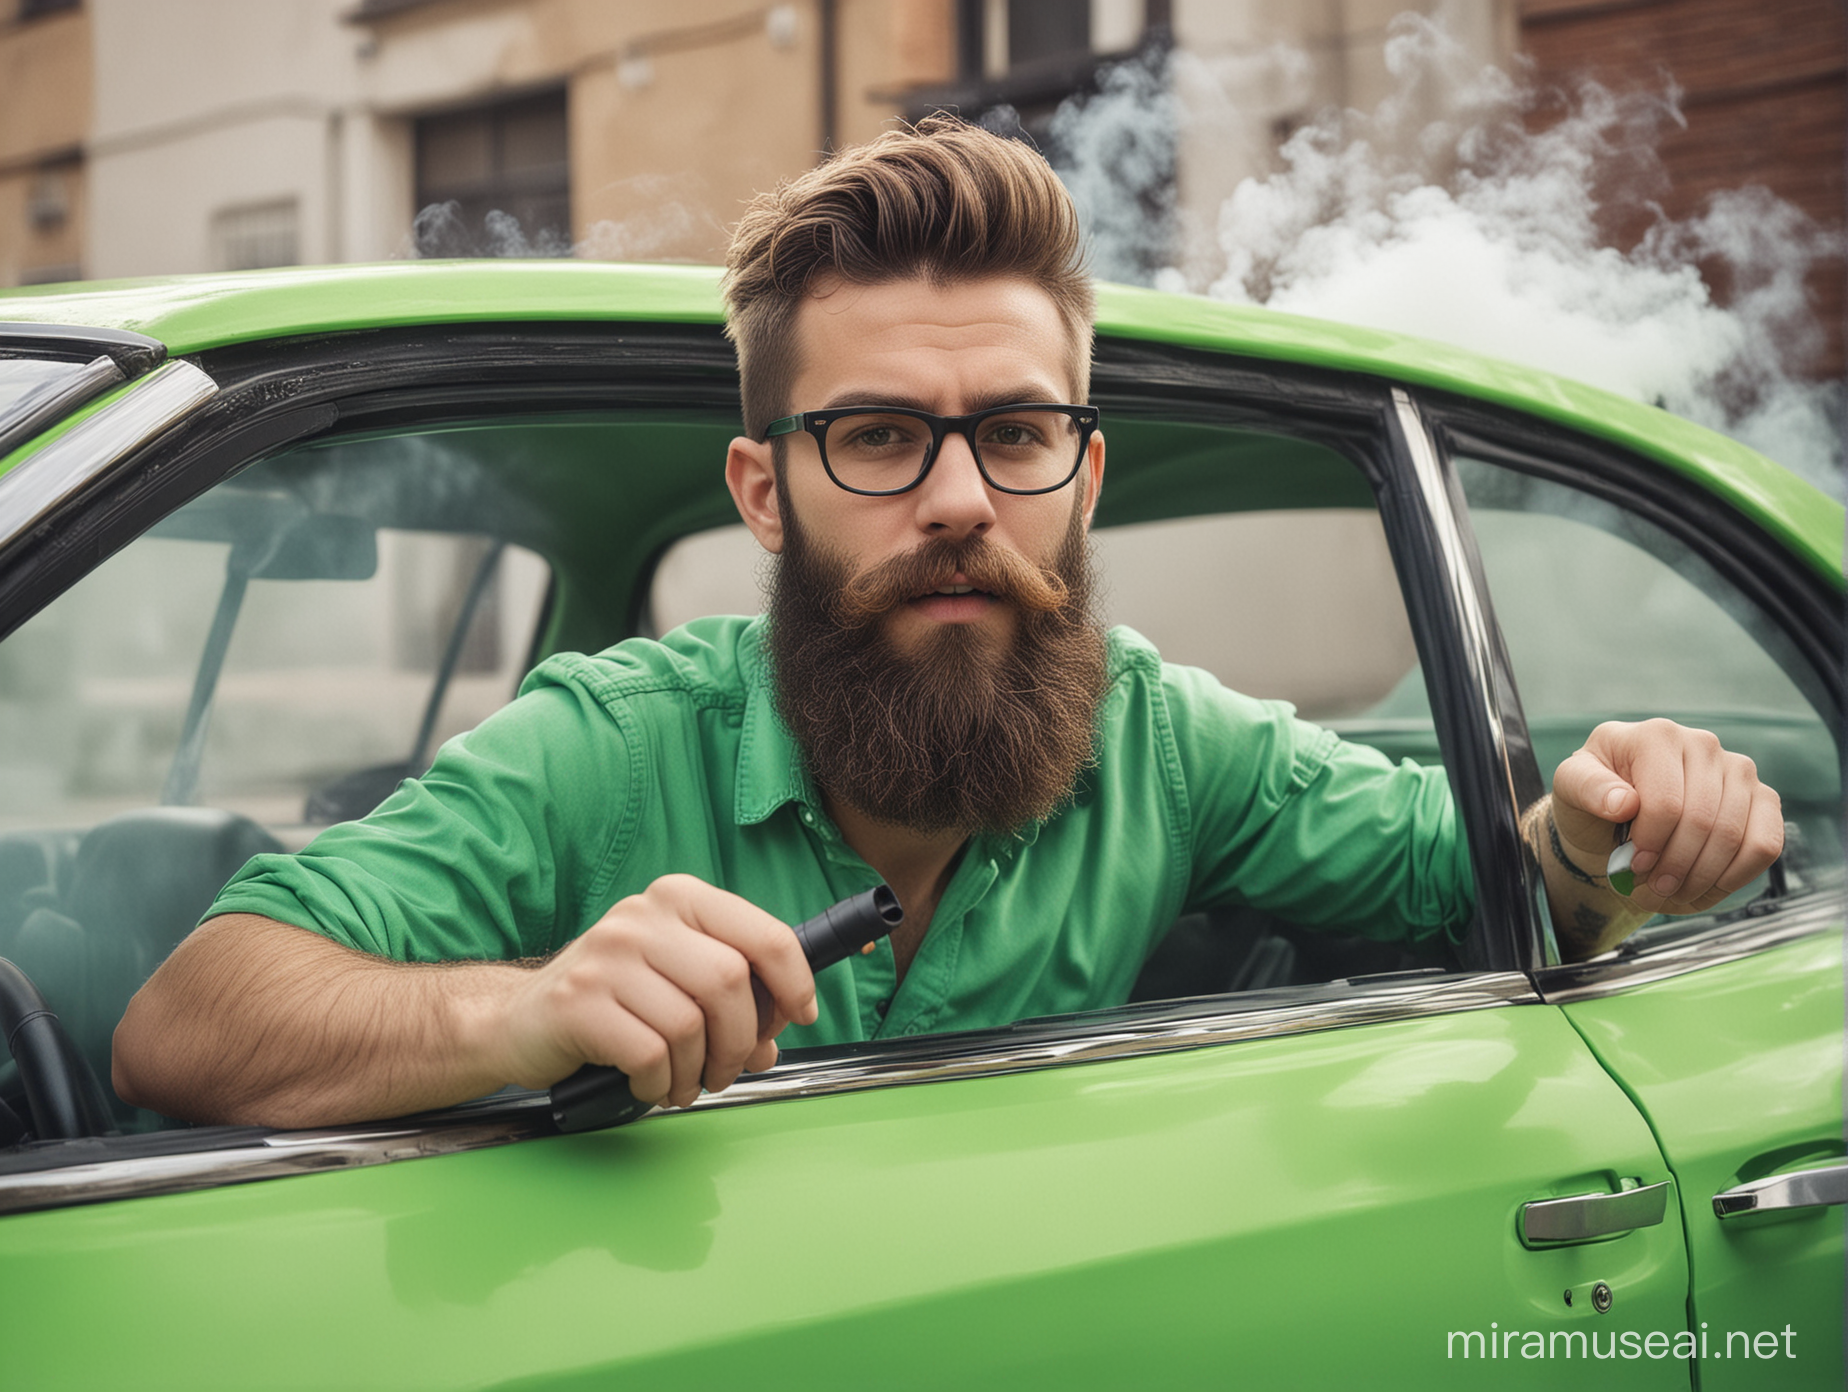 Hipster Man Vaping in Neon Green Car